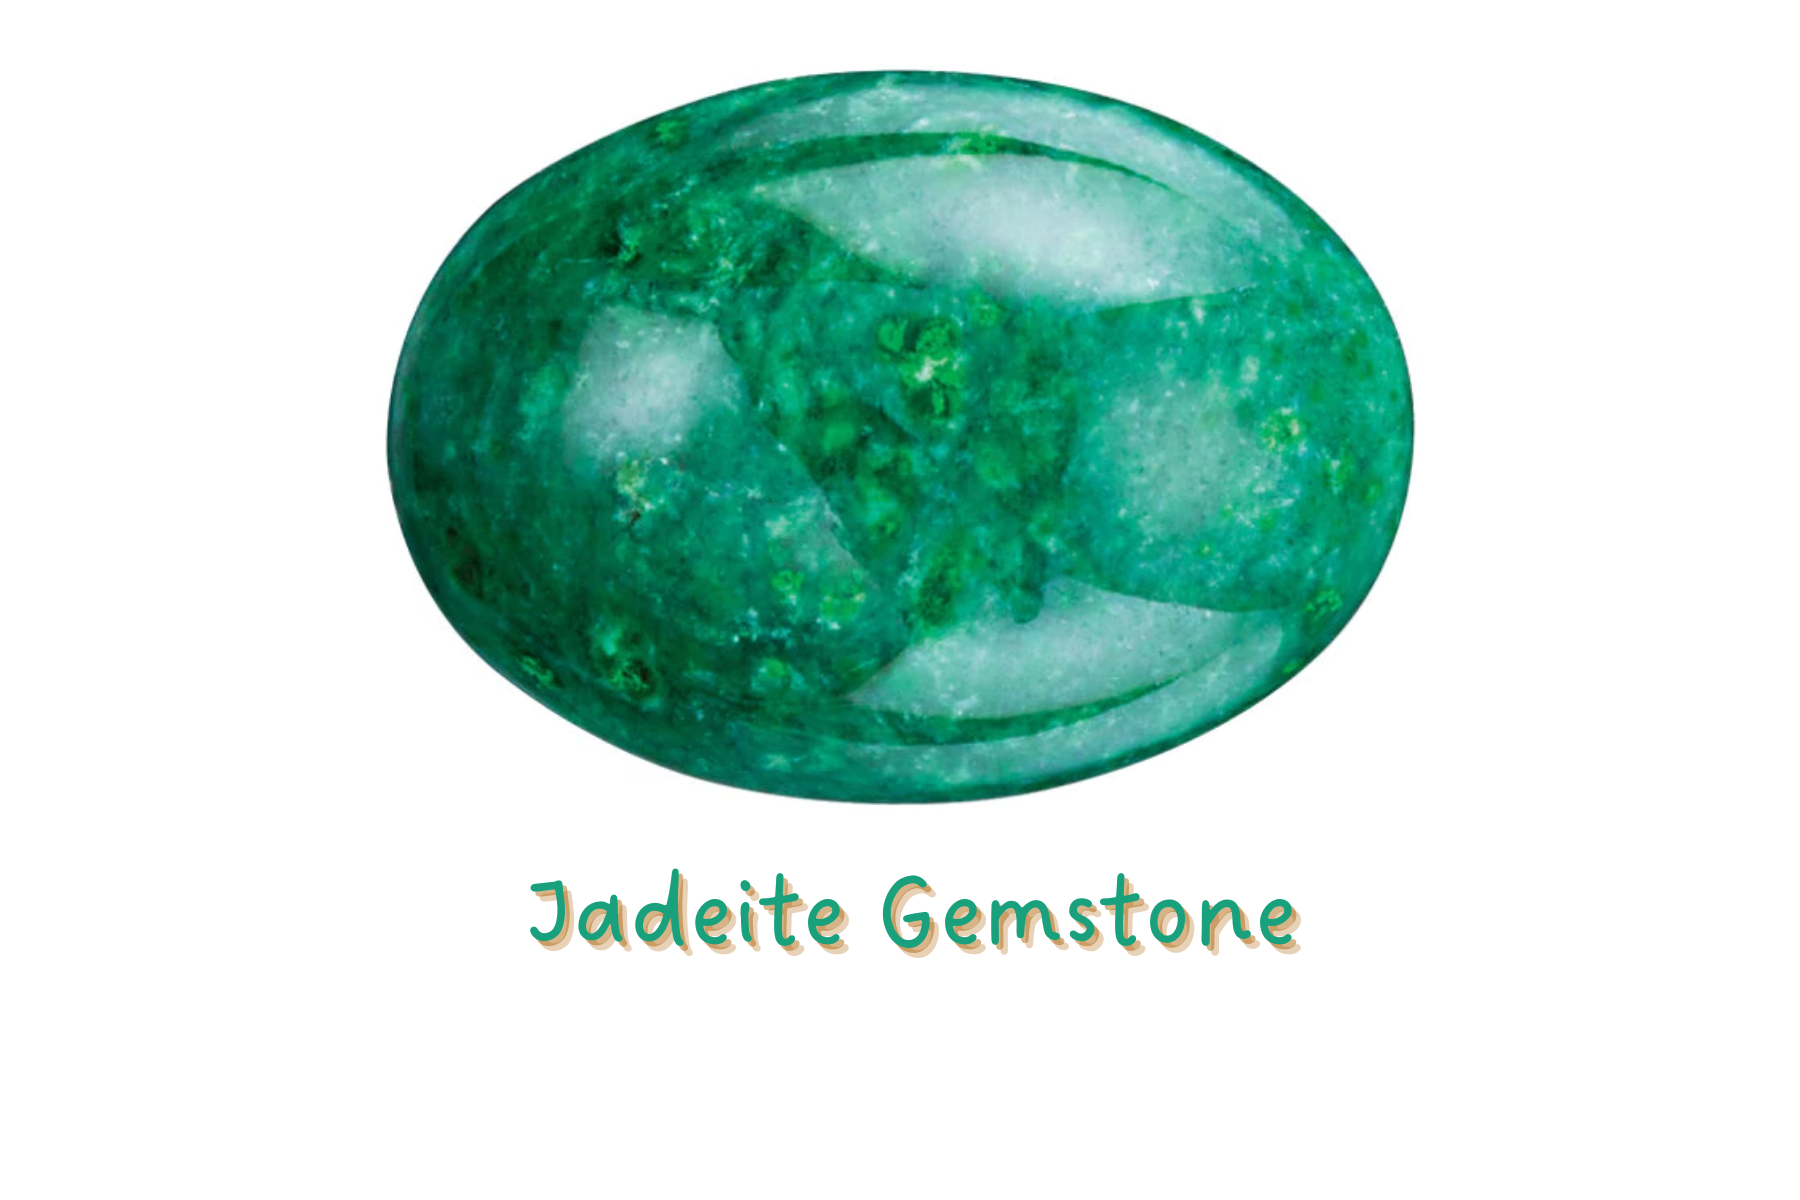 Green oblong Jadeite stone